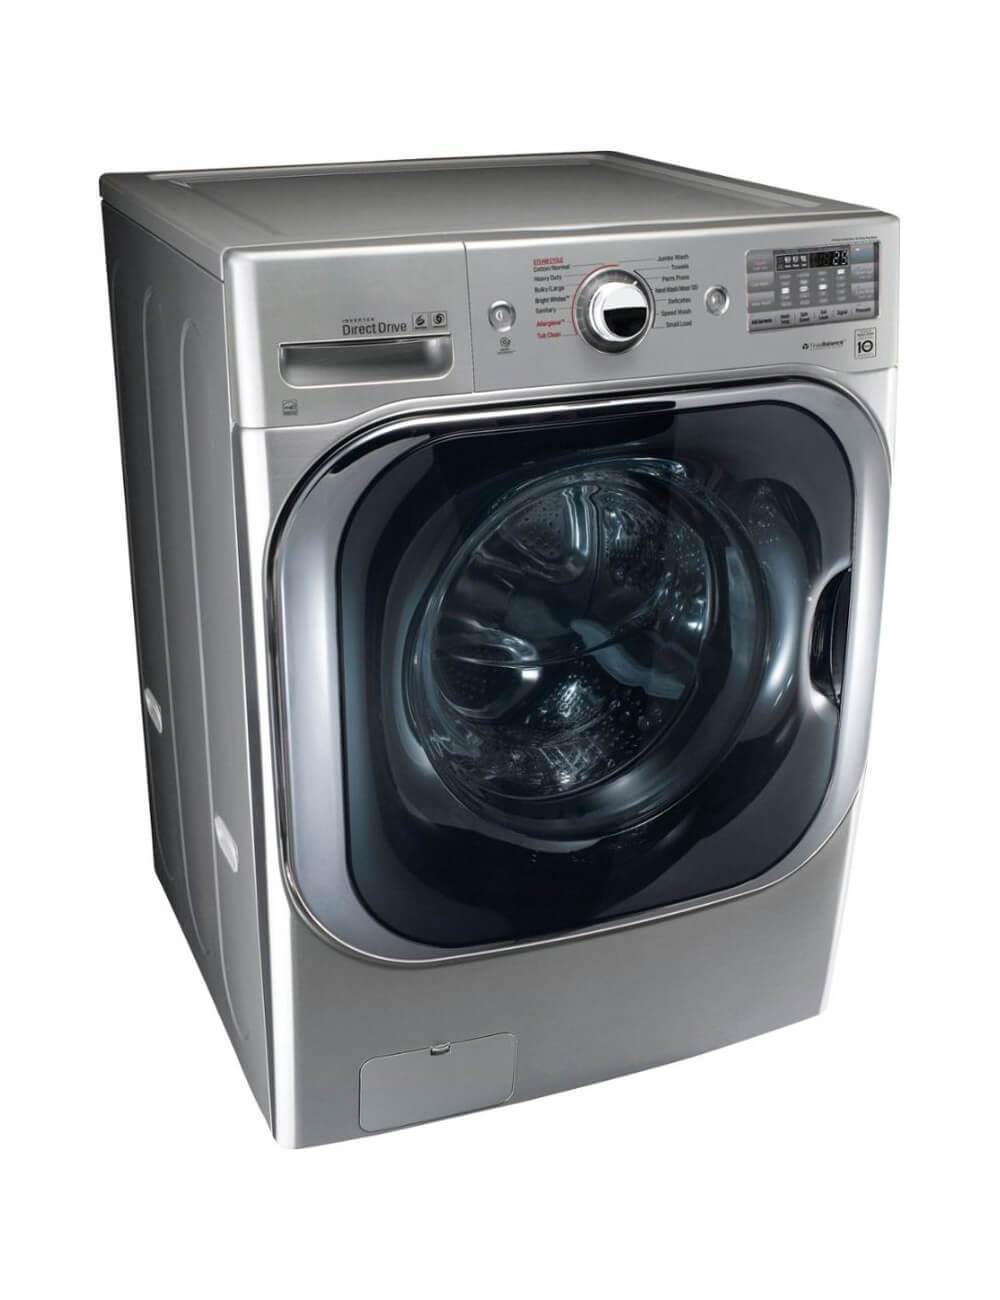 Industrial Garment Washing Machine